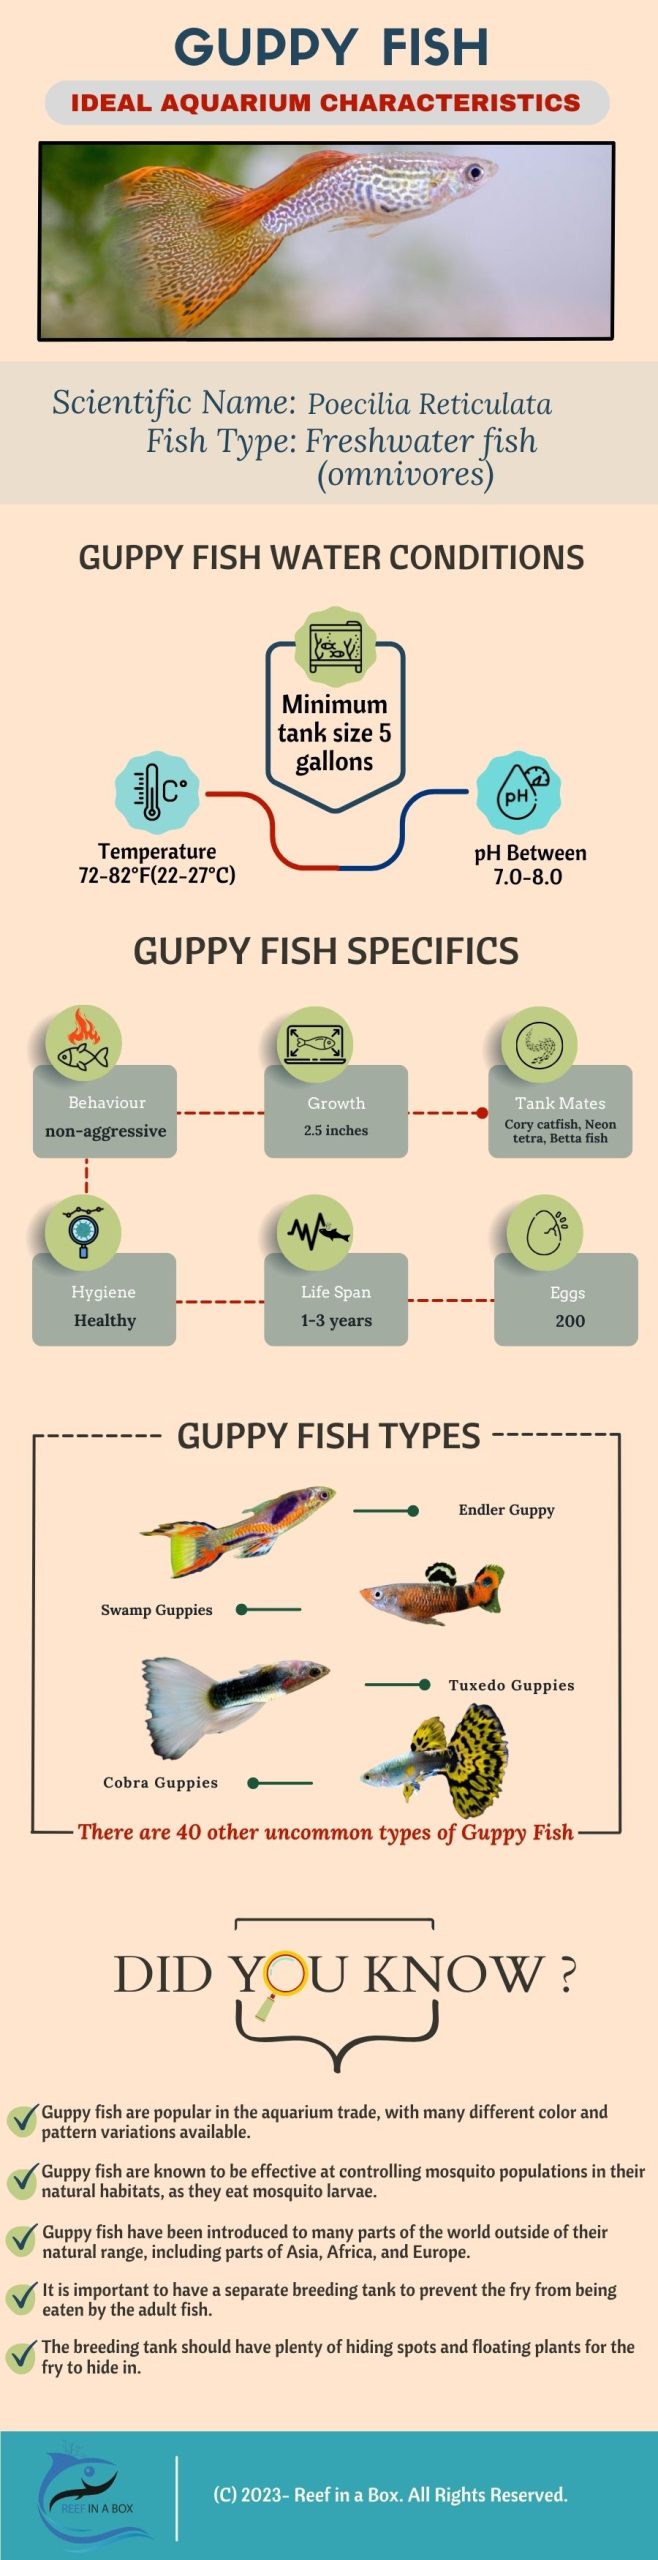 Guppy fish Infographic